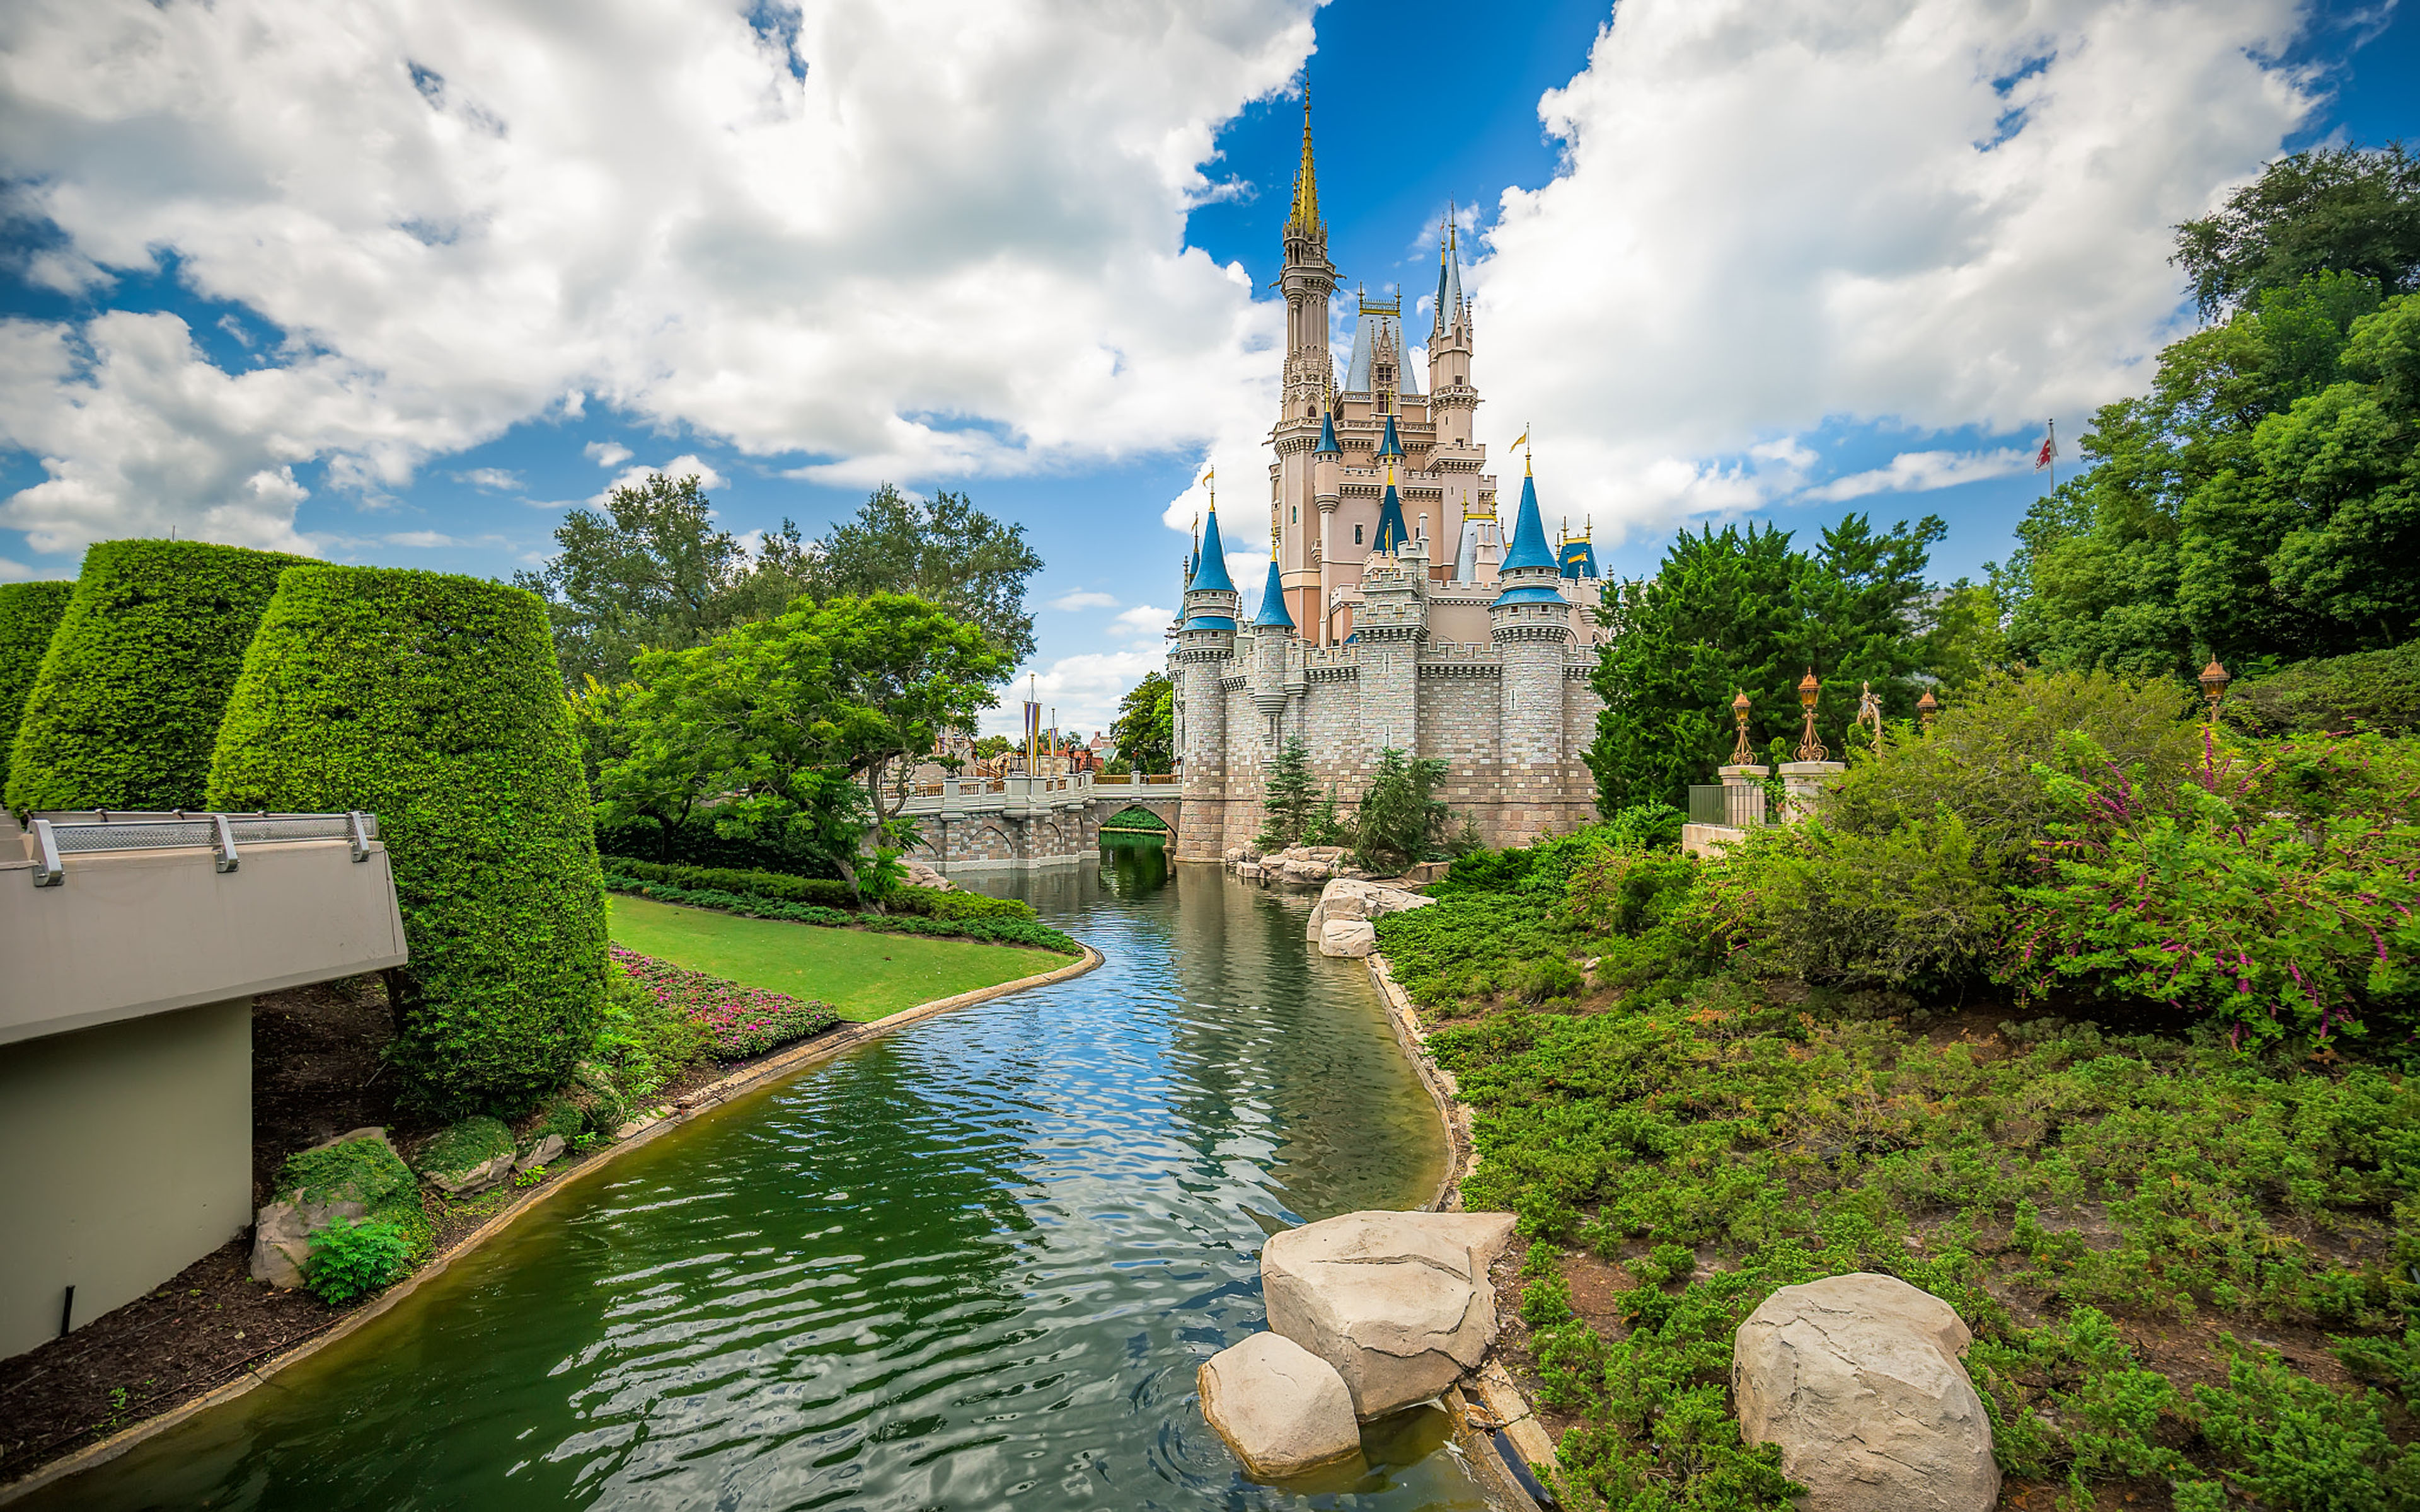 Cinderella's Castle In Disneyworld Orlando Usa 4k Ultra Hd Tv Wallpaper For  Desktop Laptop Tablet And Mobile Phones 3840x2400 : 